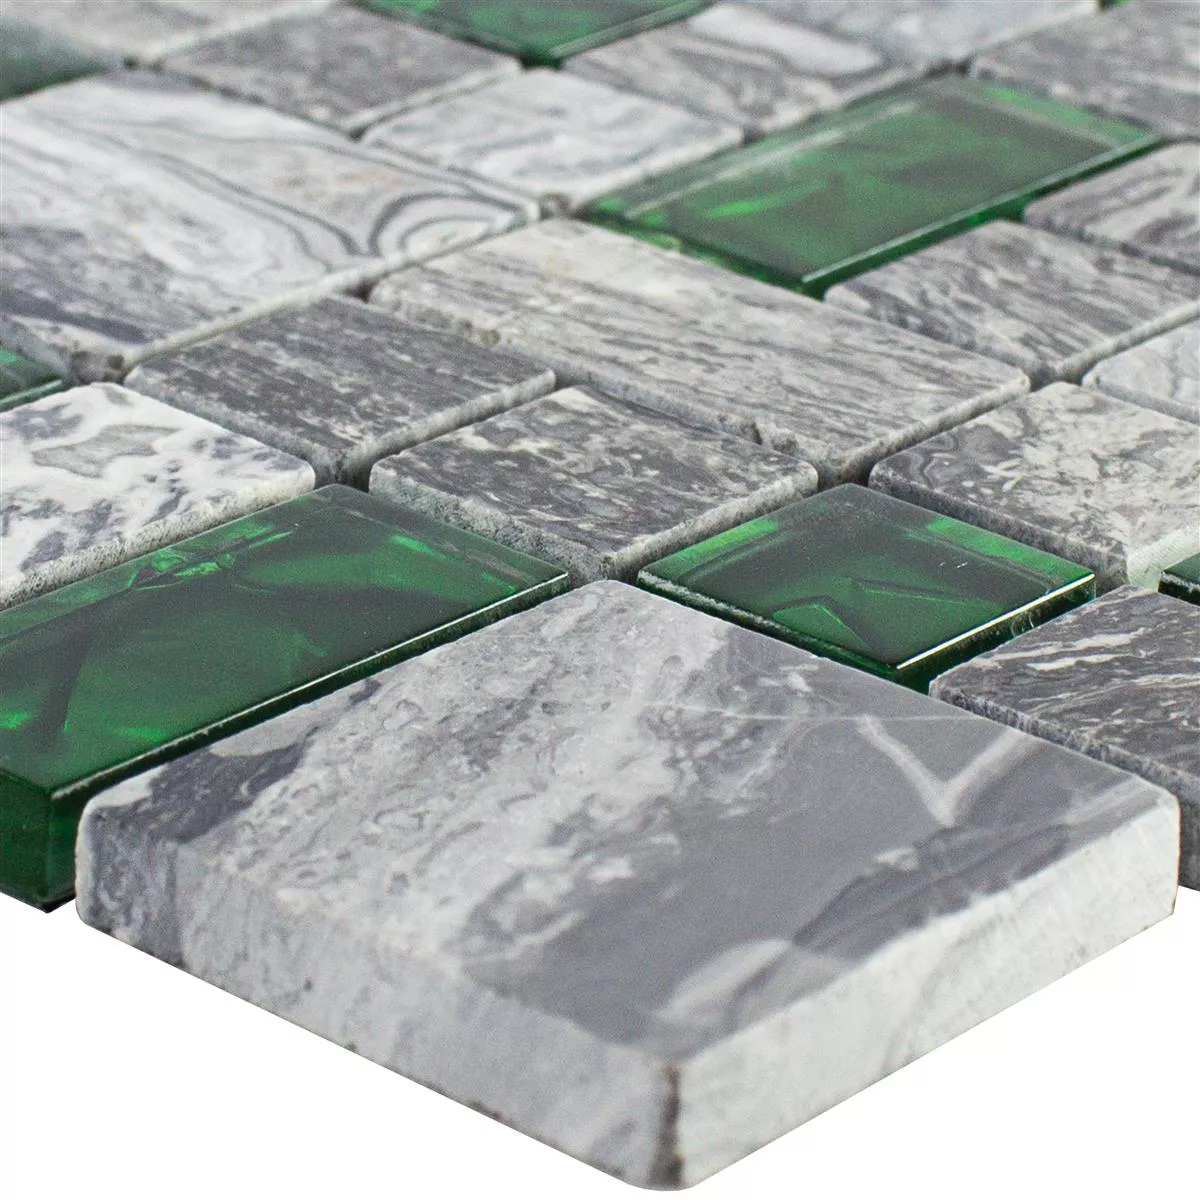 Sample Glass Mosaic Natural Stone Tiles Manavgat Grey Green ix